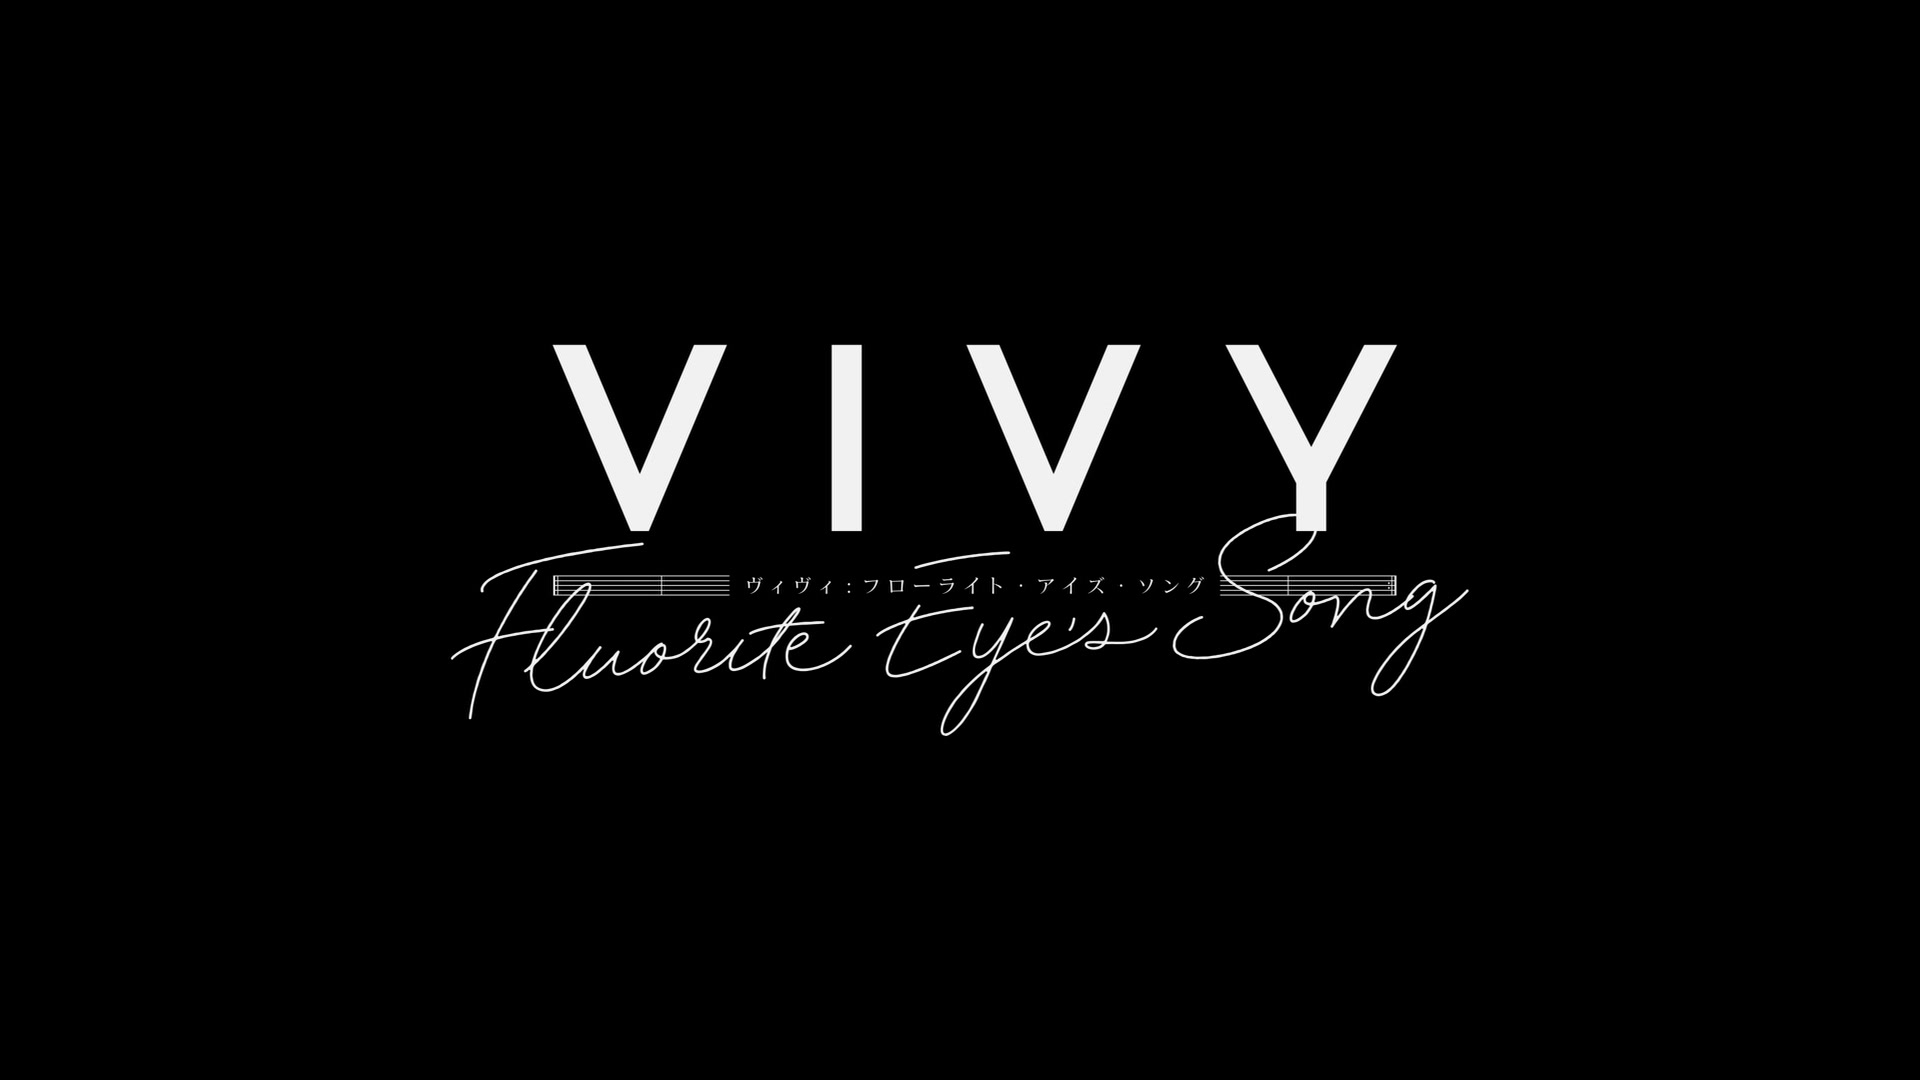 Vivy: Fluorite Eye'S Song Wallpapers